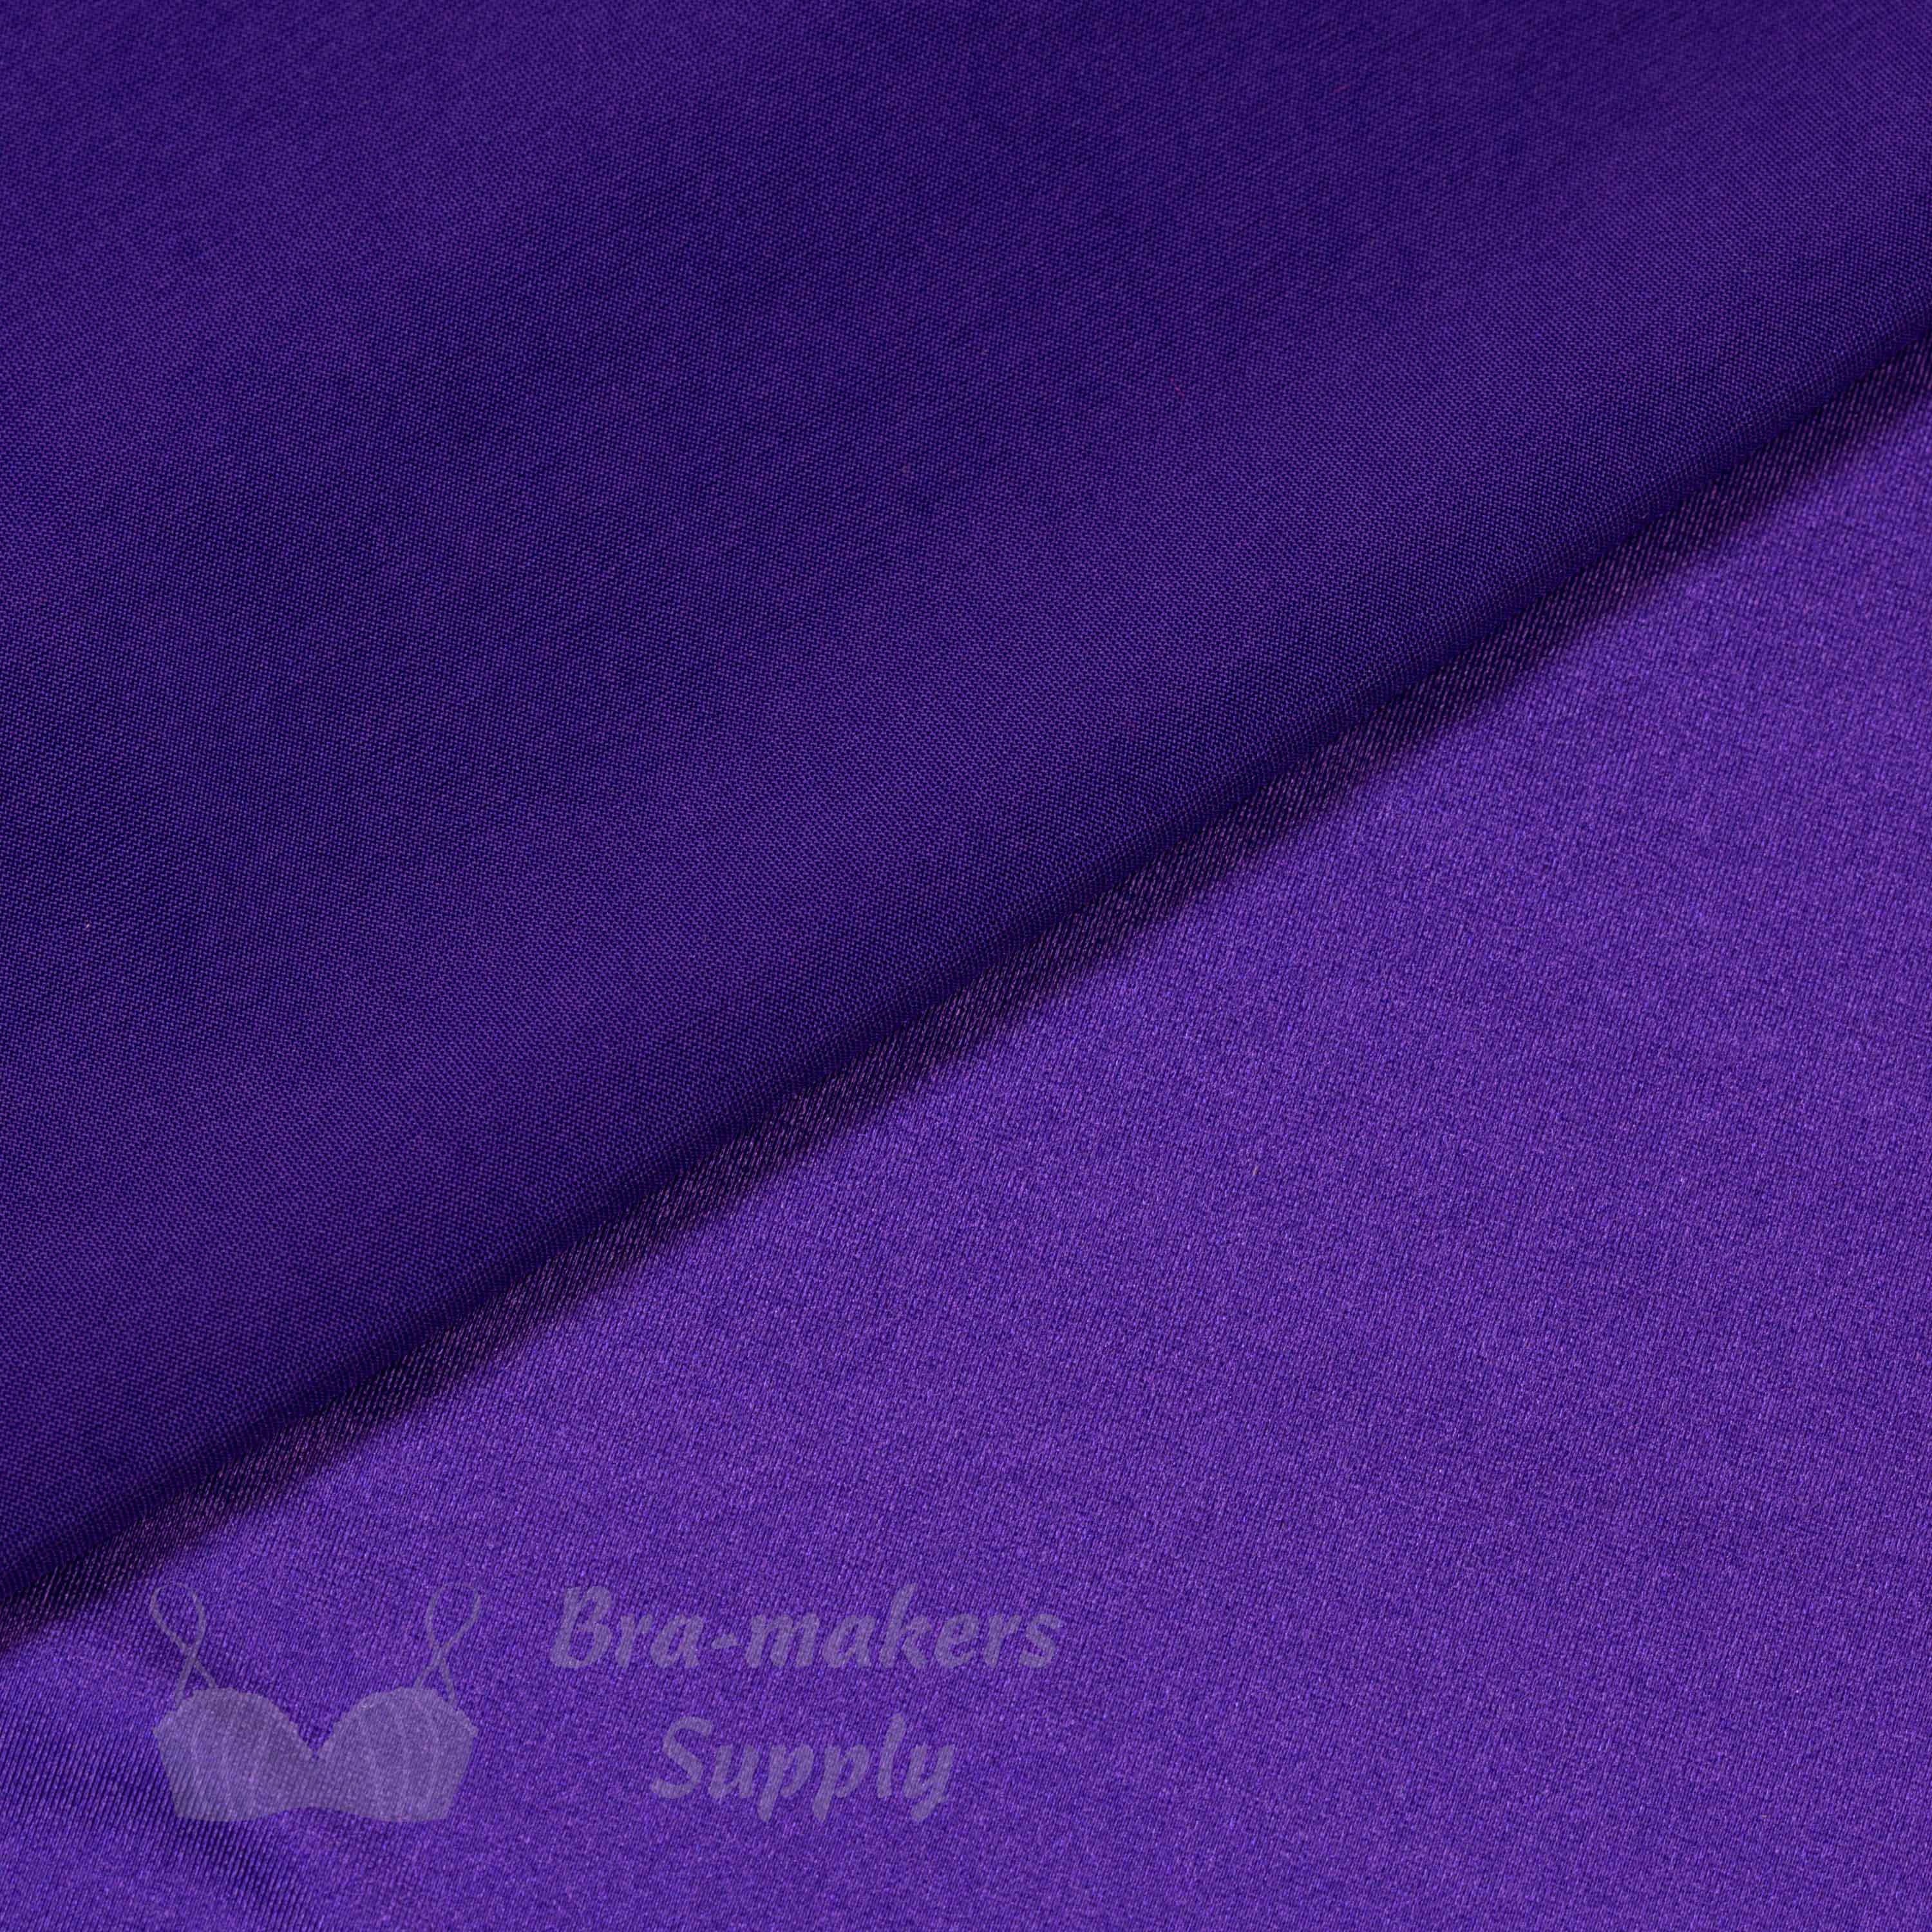 stretch satin mirror satin spandex FR-51 purple from Bra-Makers Supply folded shown